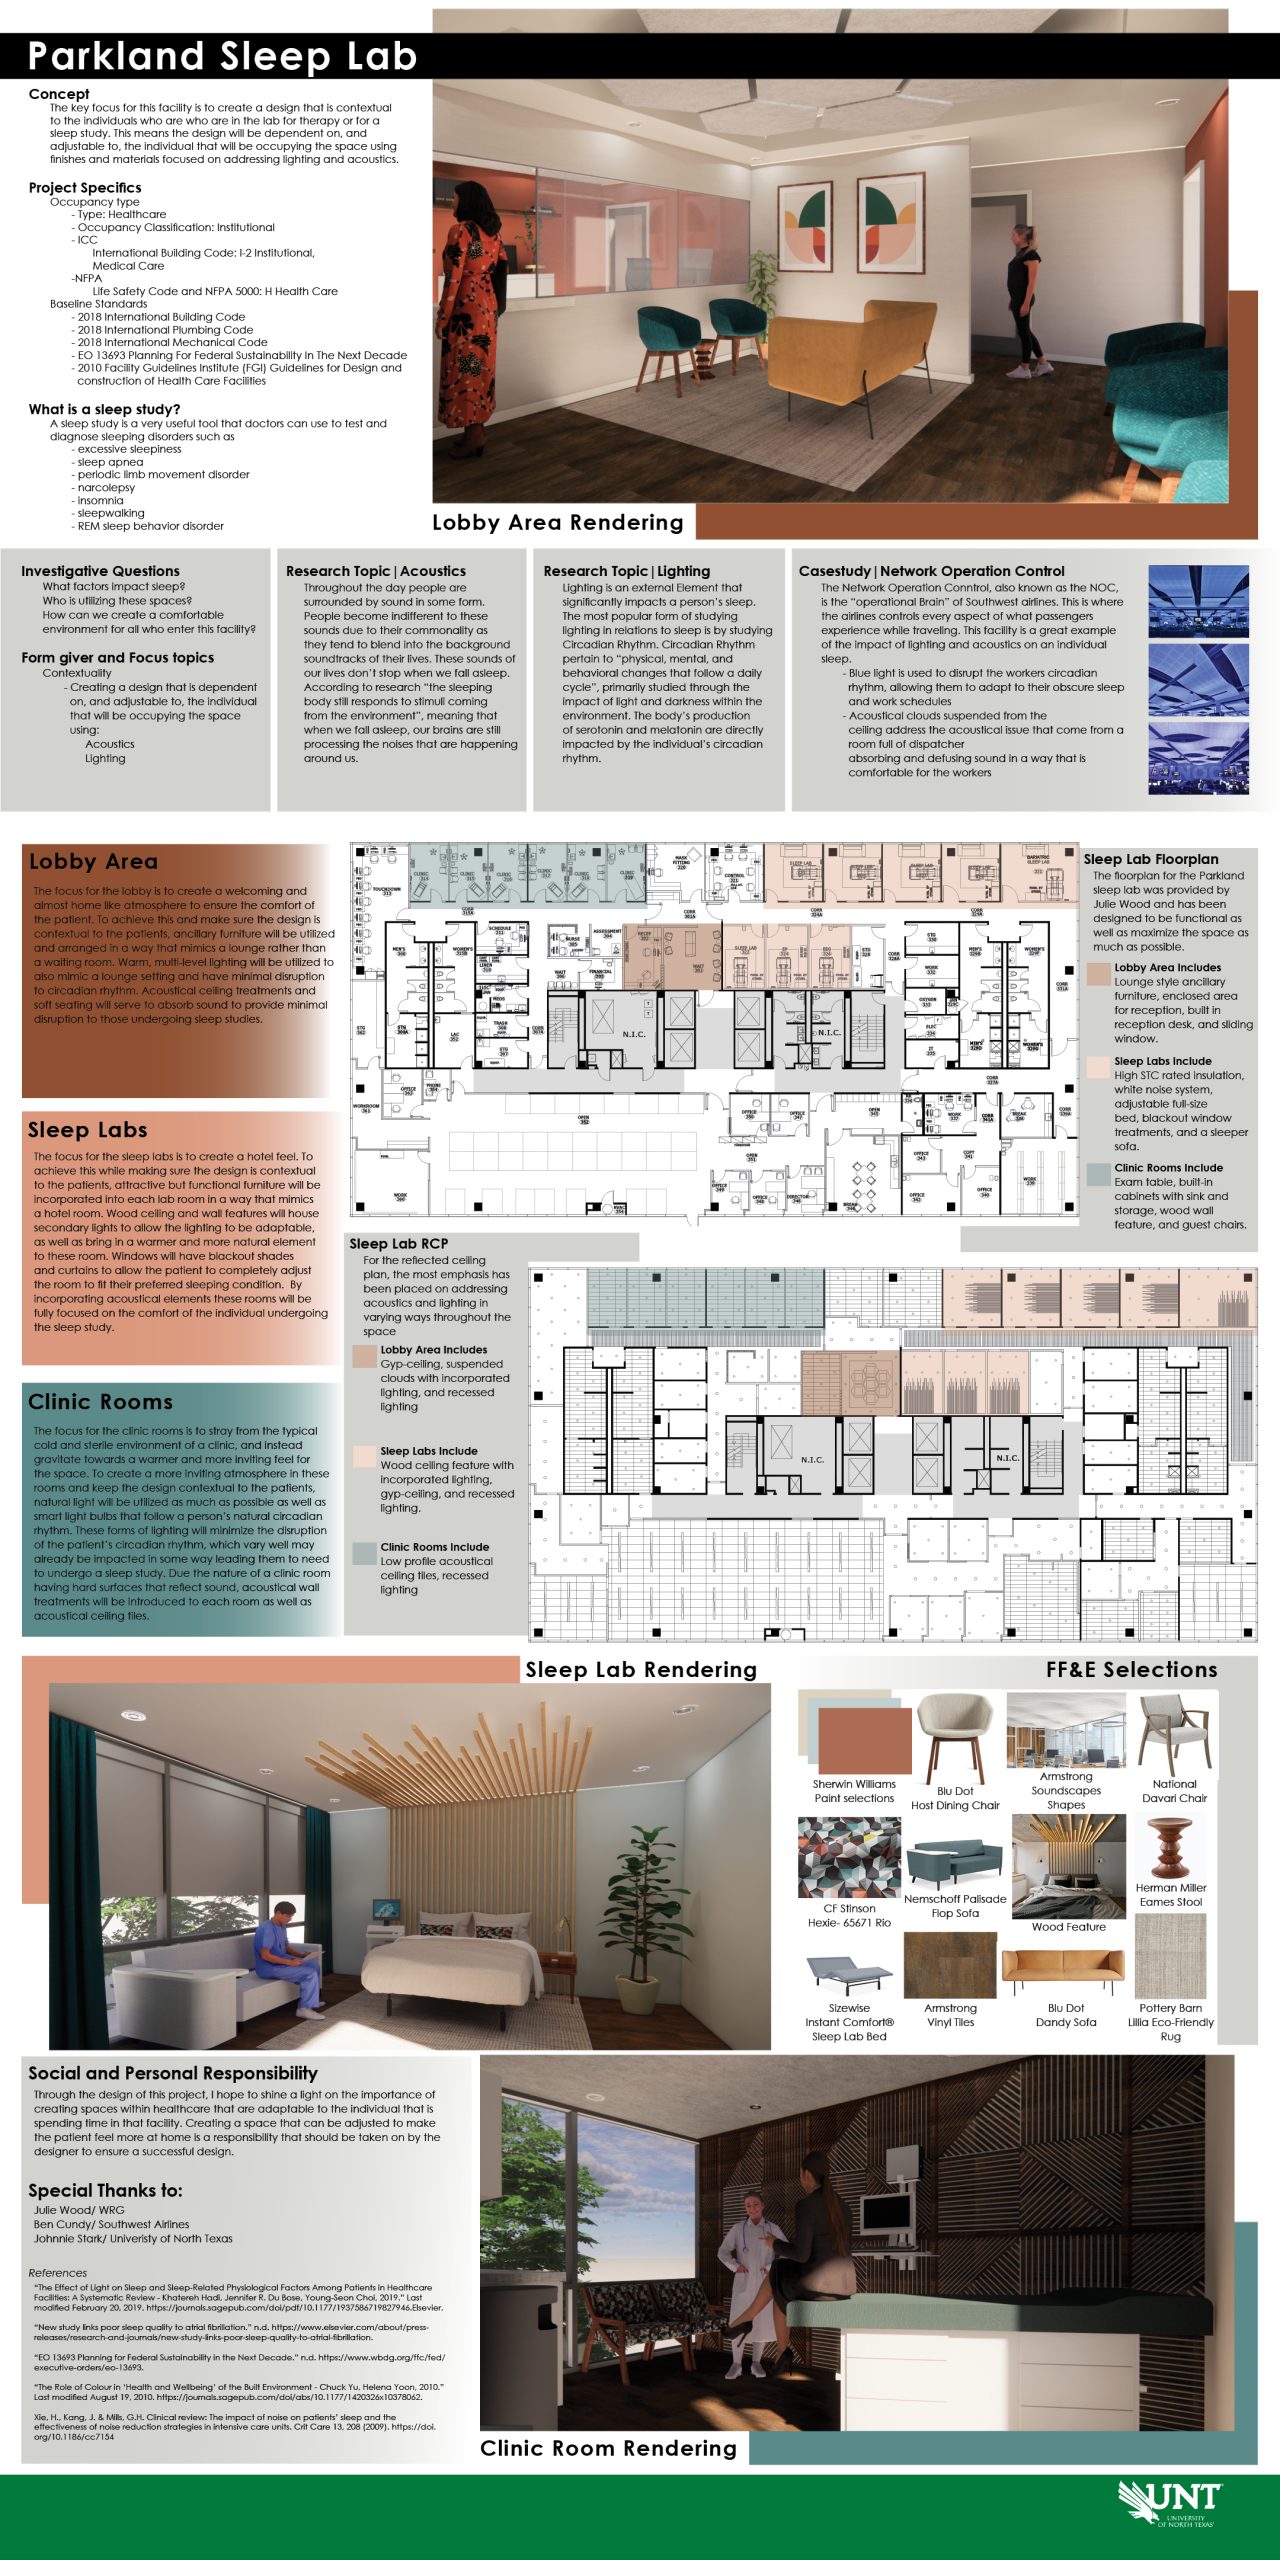 Floor plan and interior designs for Parkland sleep lab